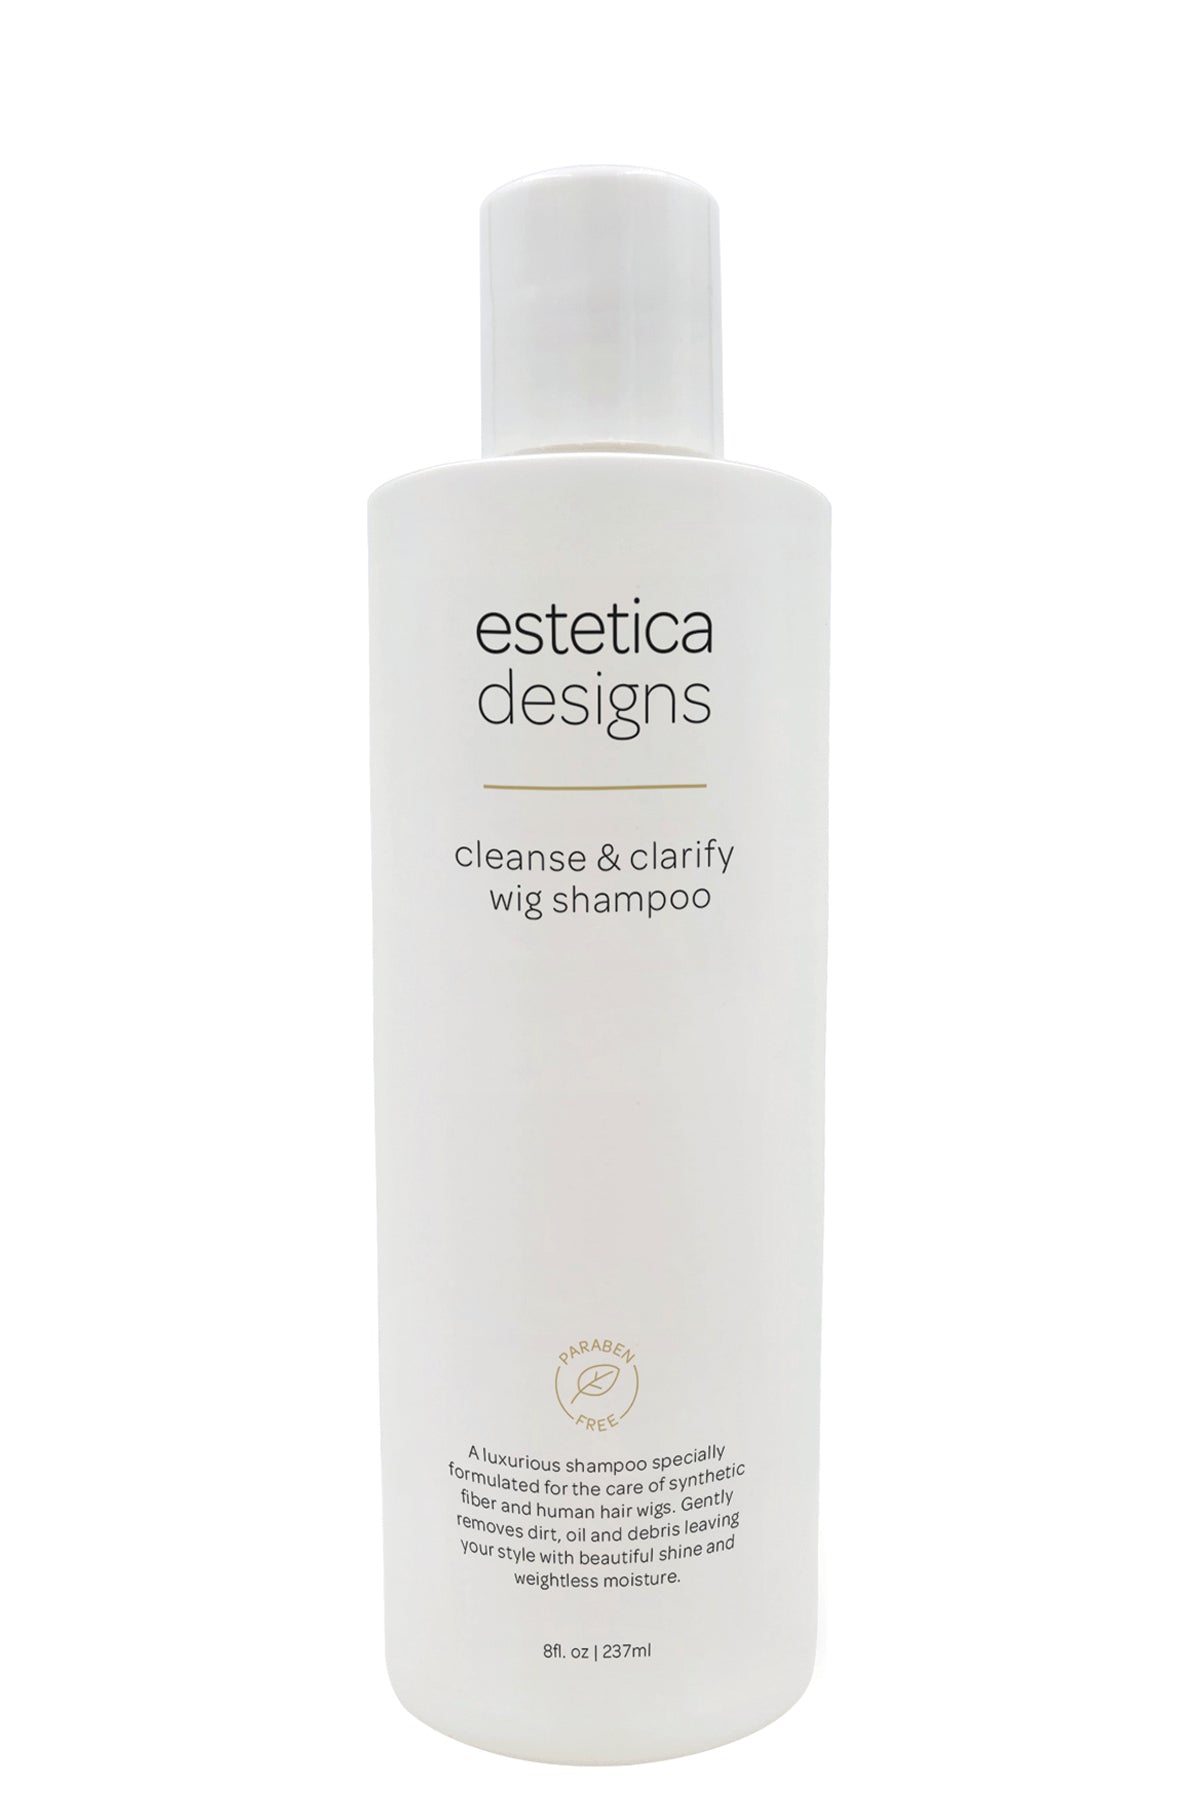 Estetica | Cleanse and Clarify Wig Shampoo by Estetica